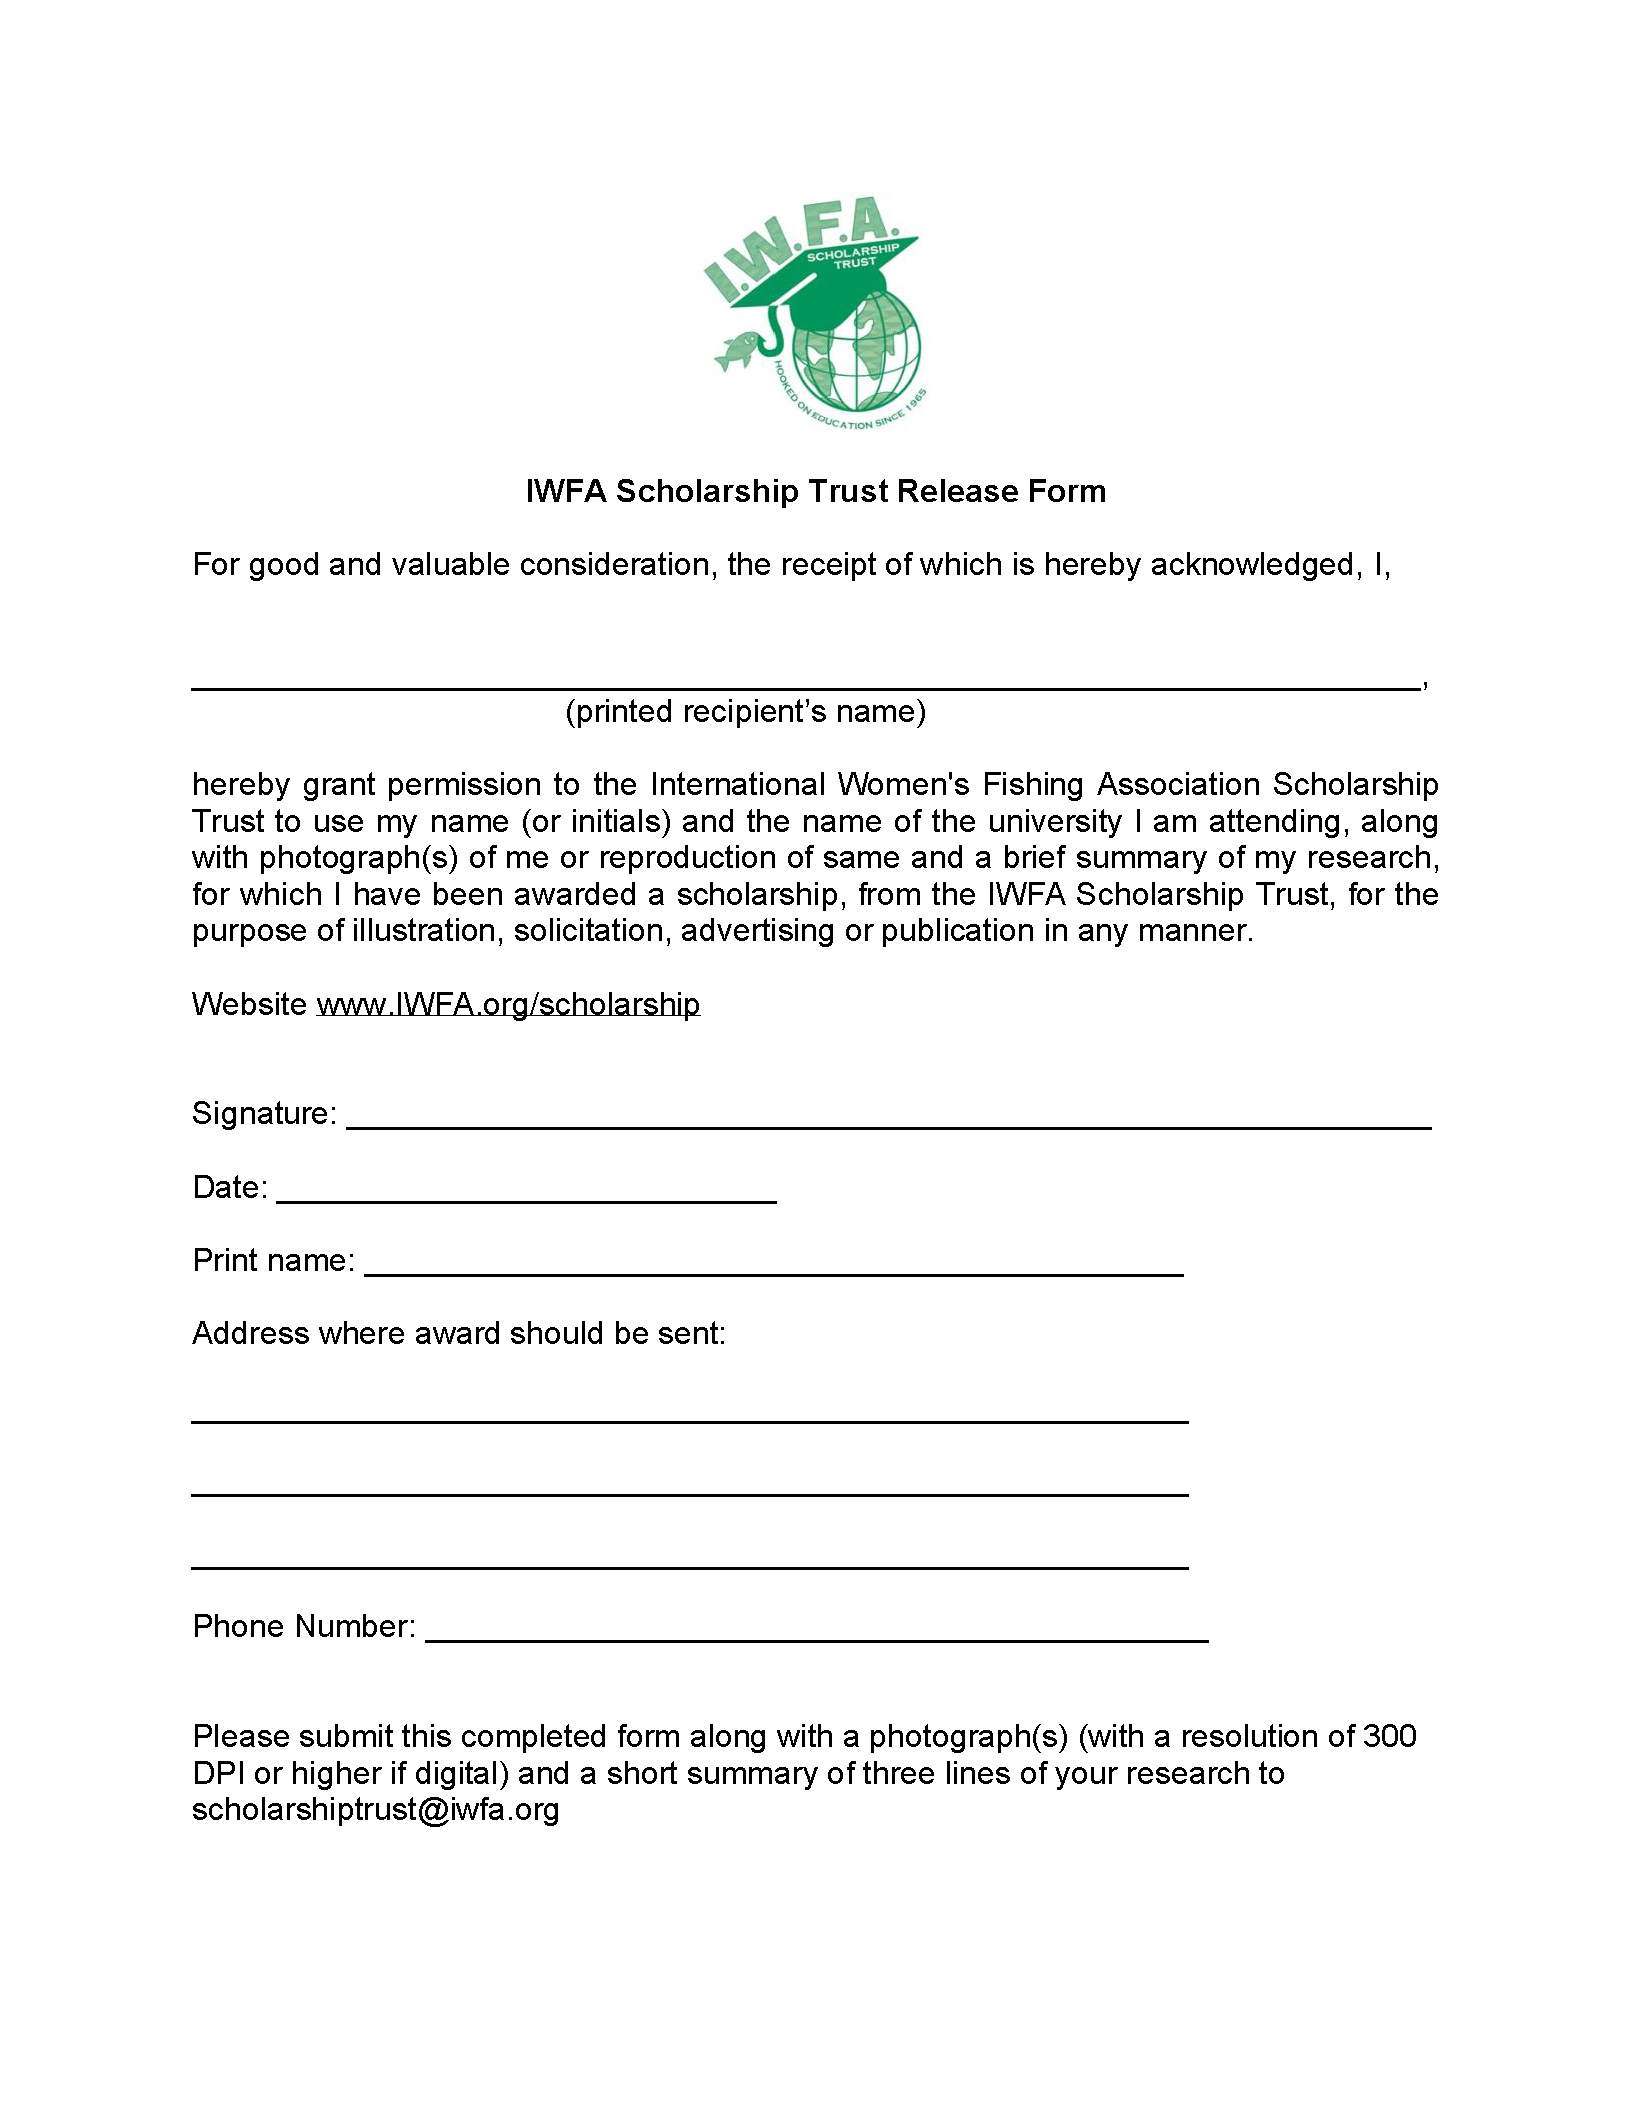 IWFA scholarship trust release form 2020